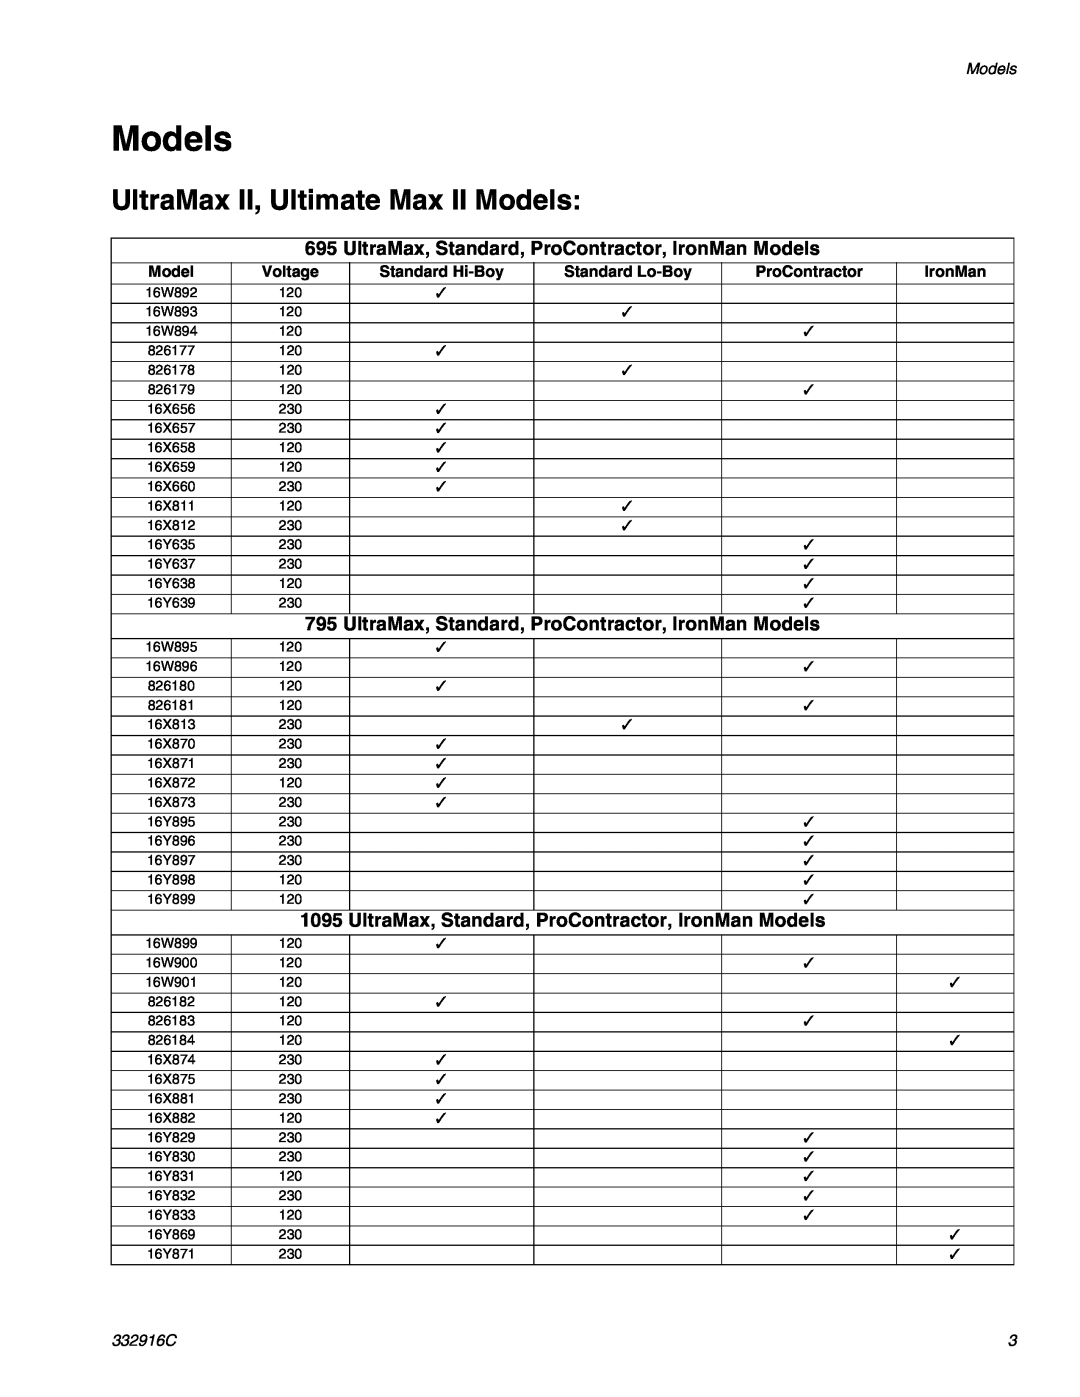 Graco Mark X, Mark V UltraMax II, Ultimate Max II Models, UltraMax, Standard, ProContractor, IronMan Models, 332916C 